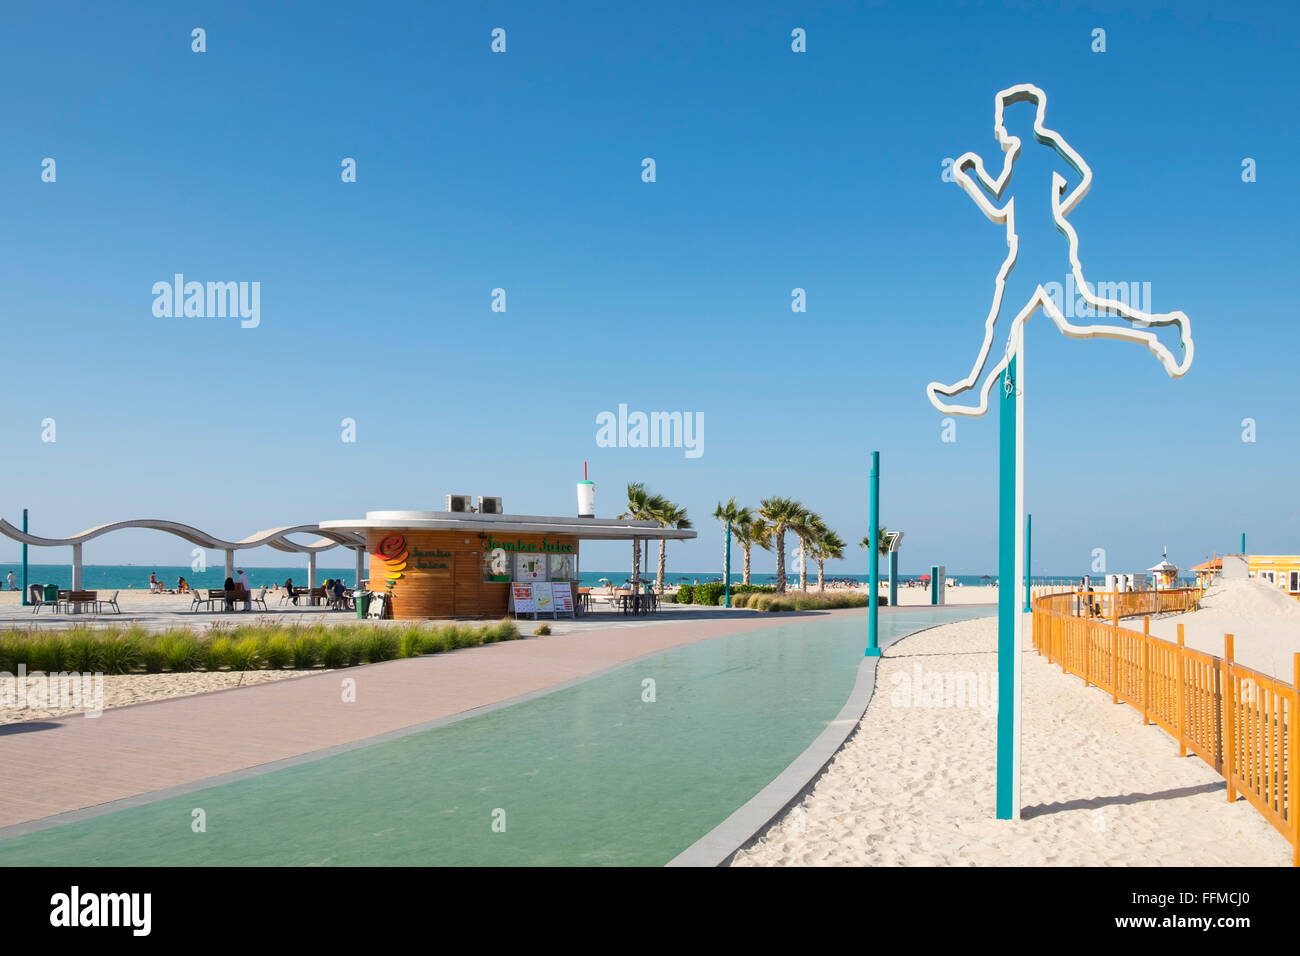 New public boardwalk and jogging track beside beach in Dubai United Arab Emirates Stock Photo